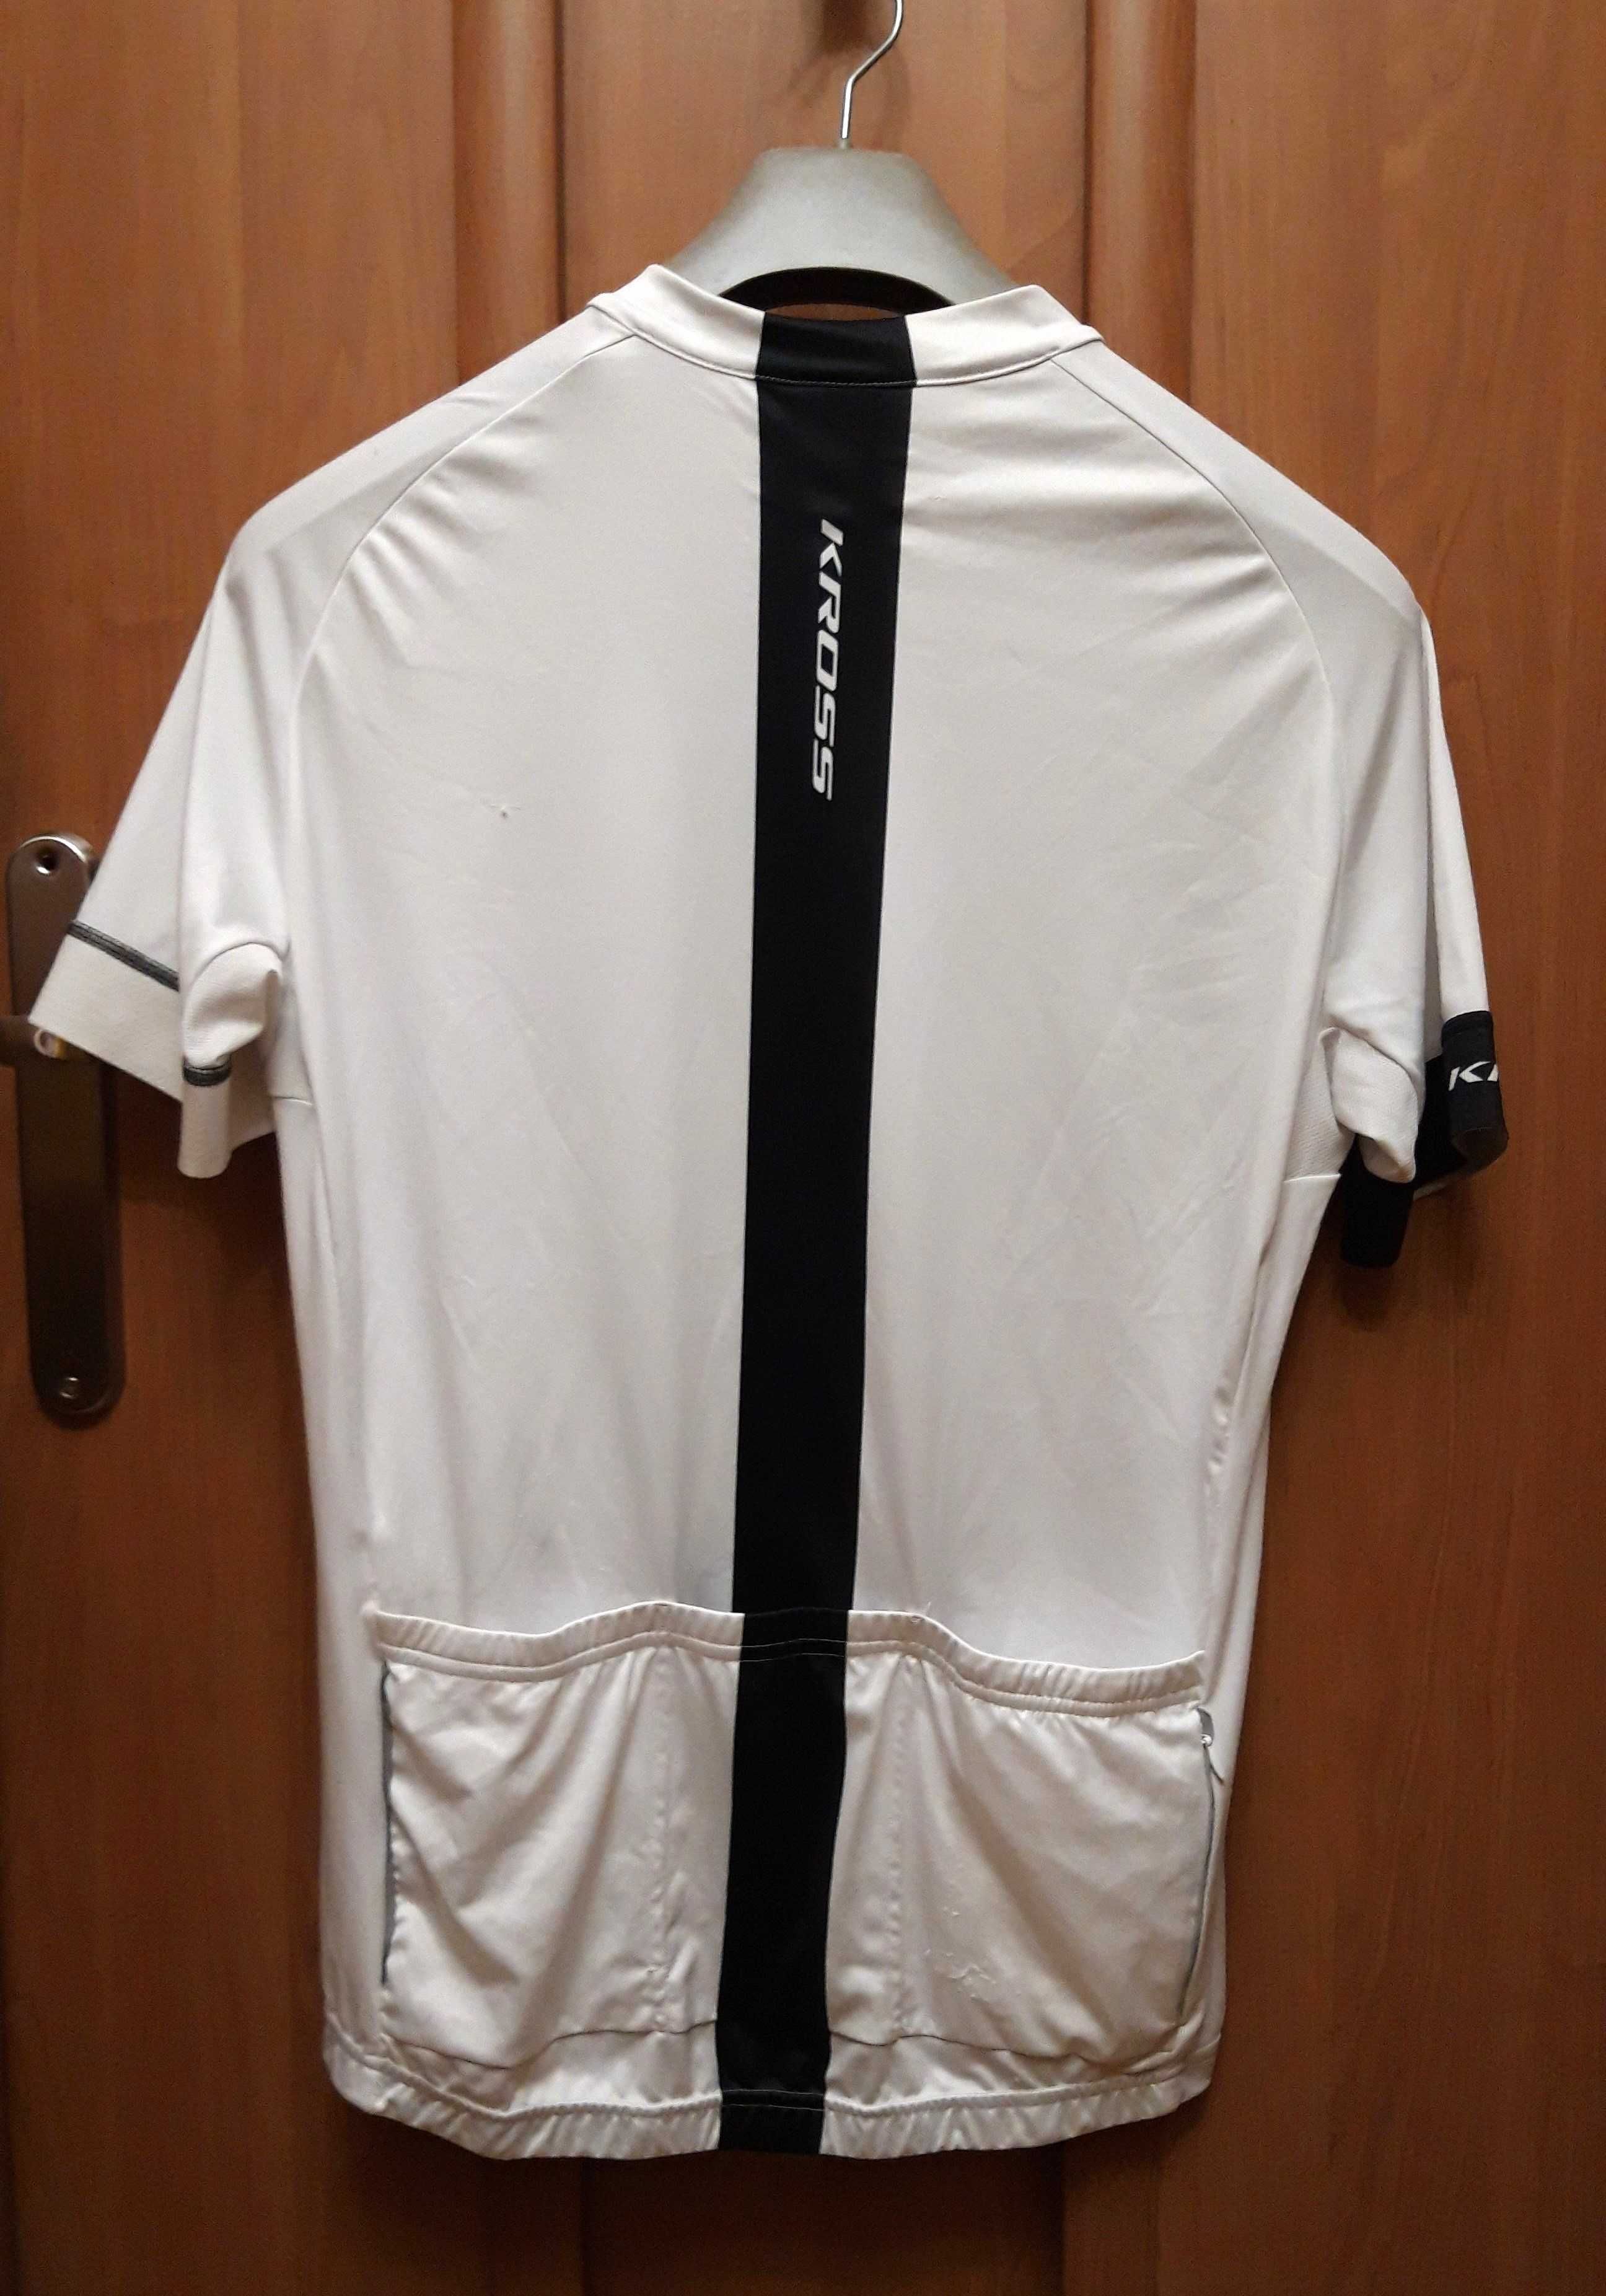 Koszulka rowerowa Kross XL - XXL męska